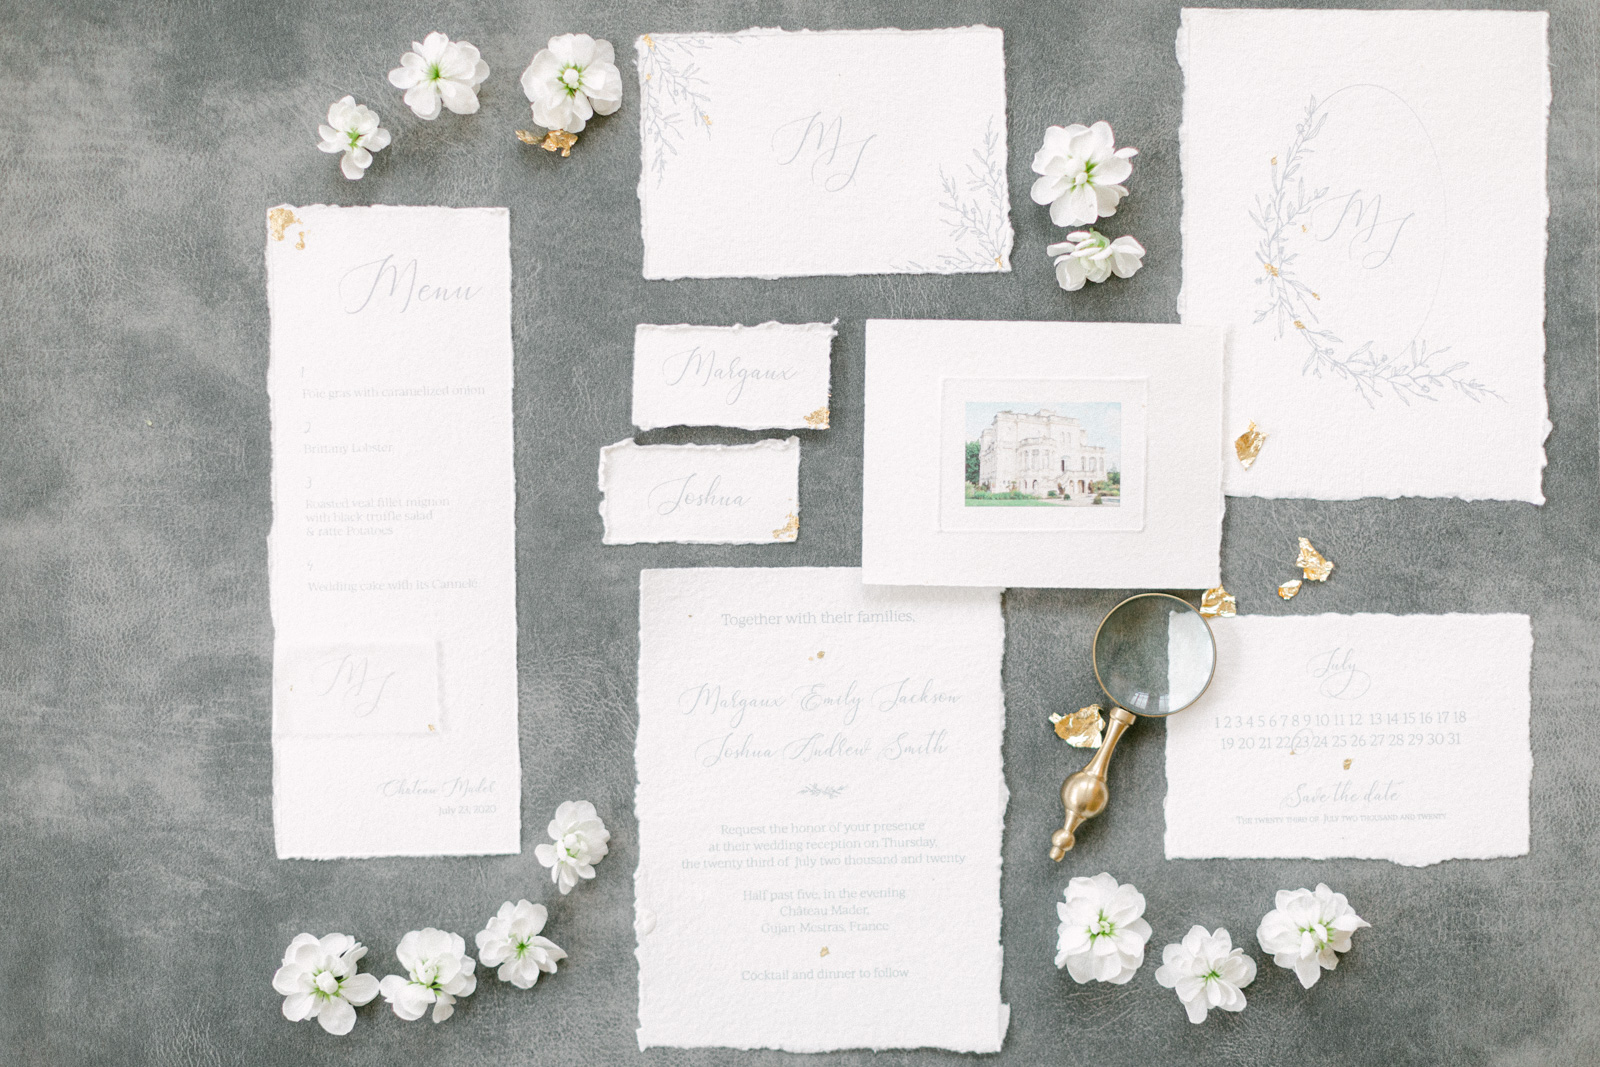 Chateau Mader wedding invitation flatlay with elegant details